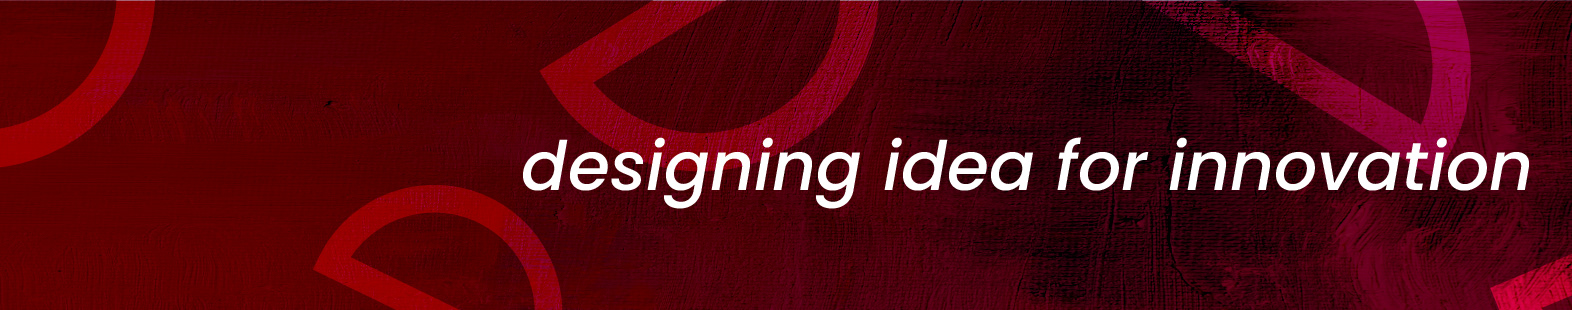 Ideasign 101's profile banner